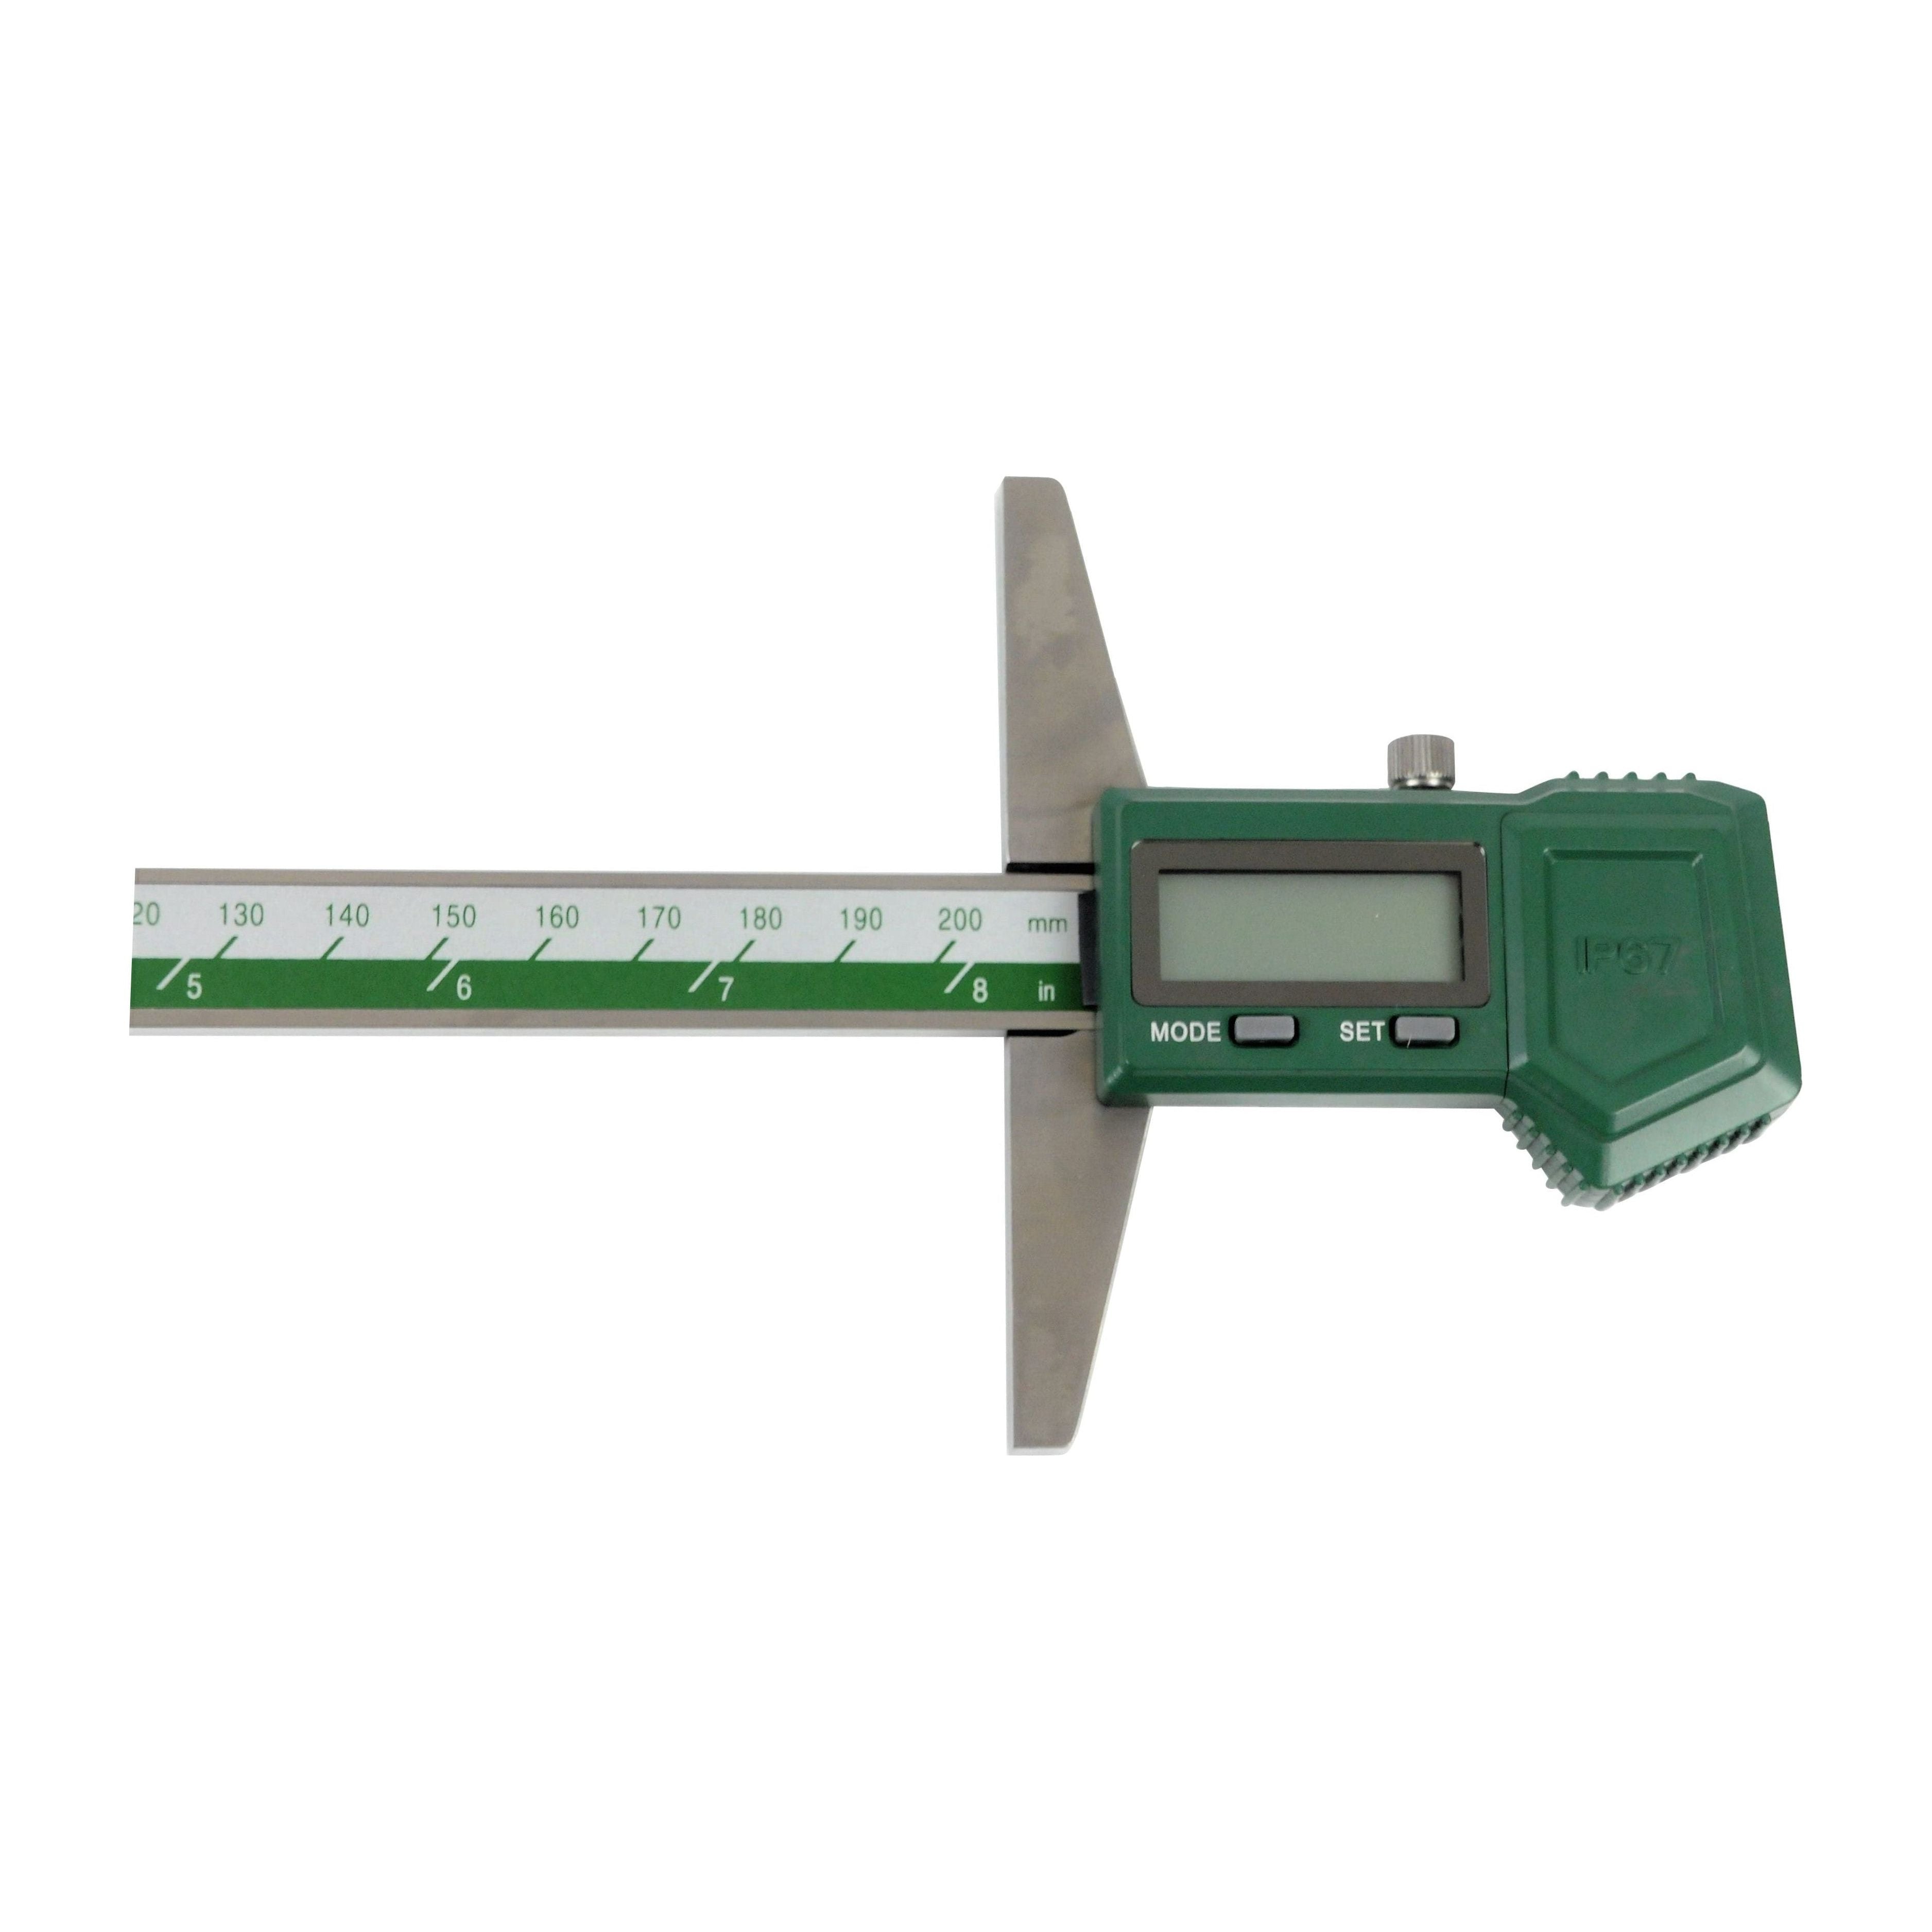 Insize IP67 Digital Depth Gauge 0-200mm / 0-8" Range Series 1149-200